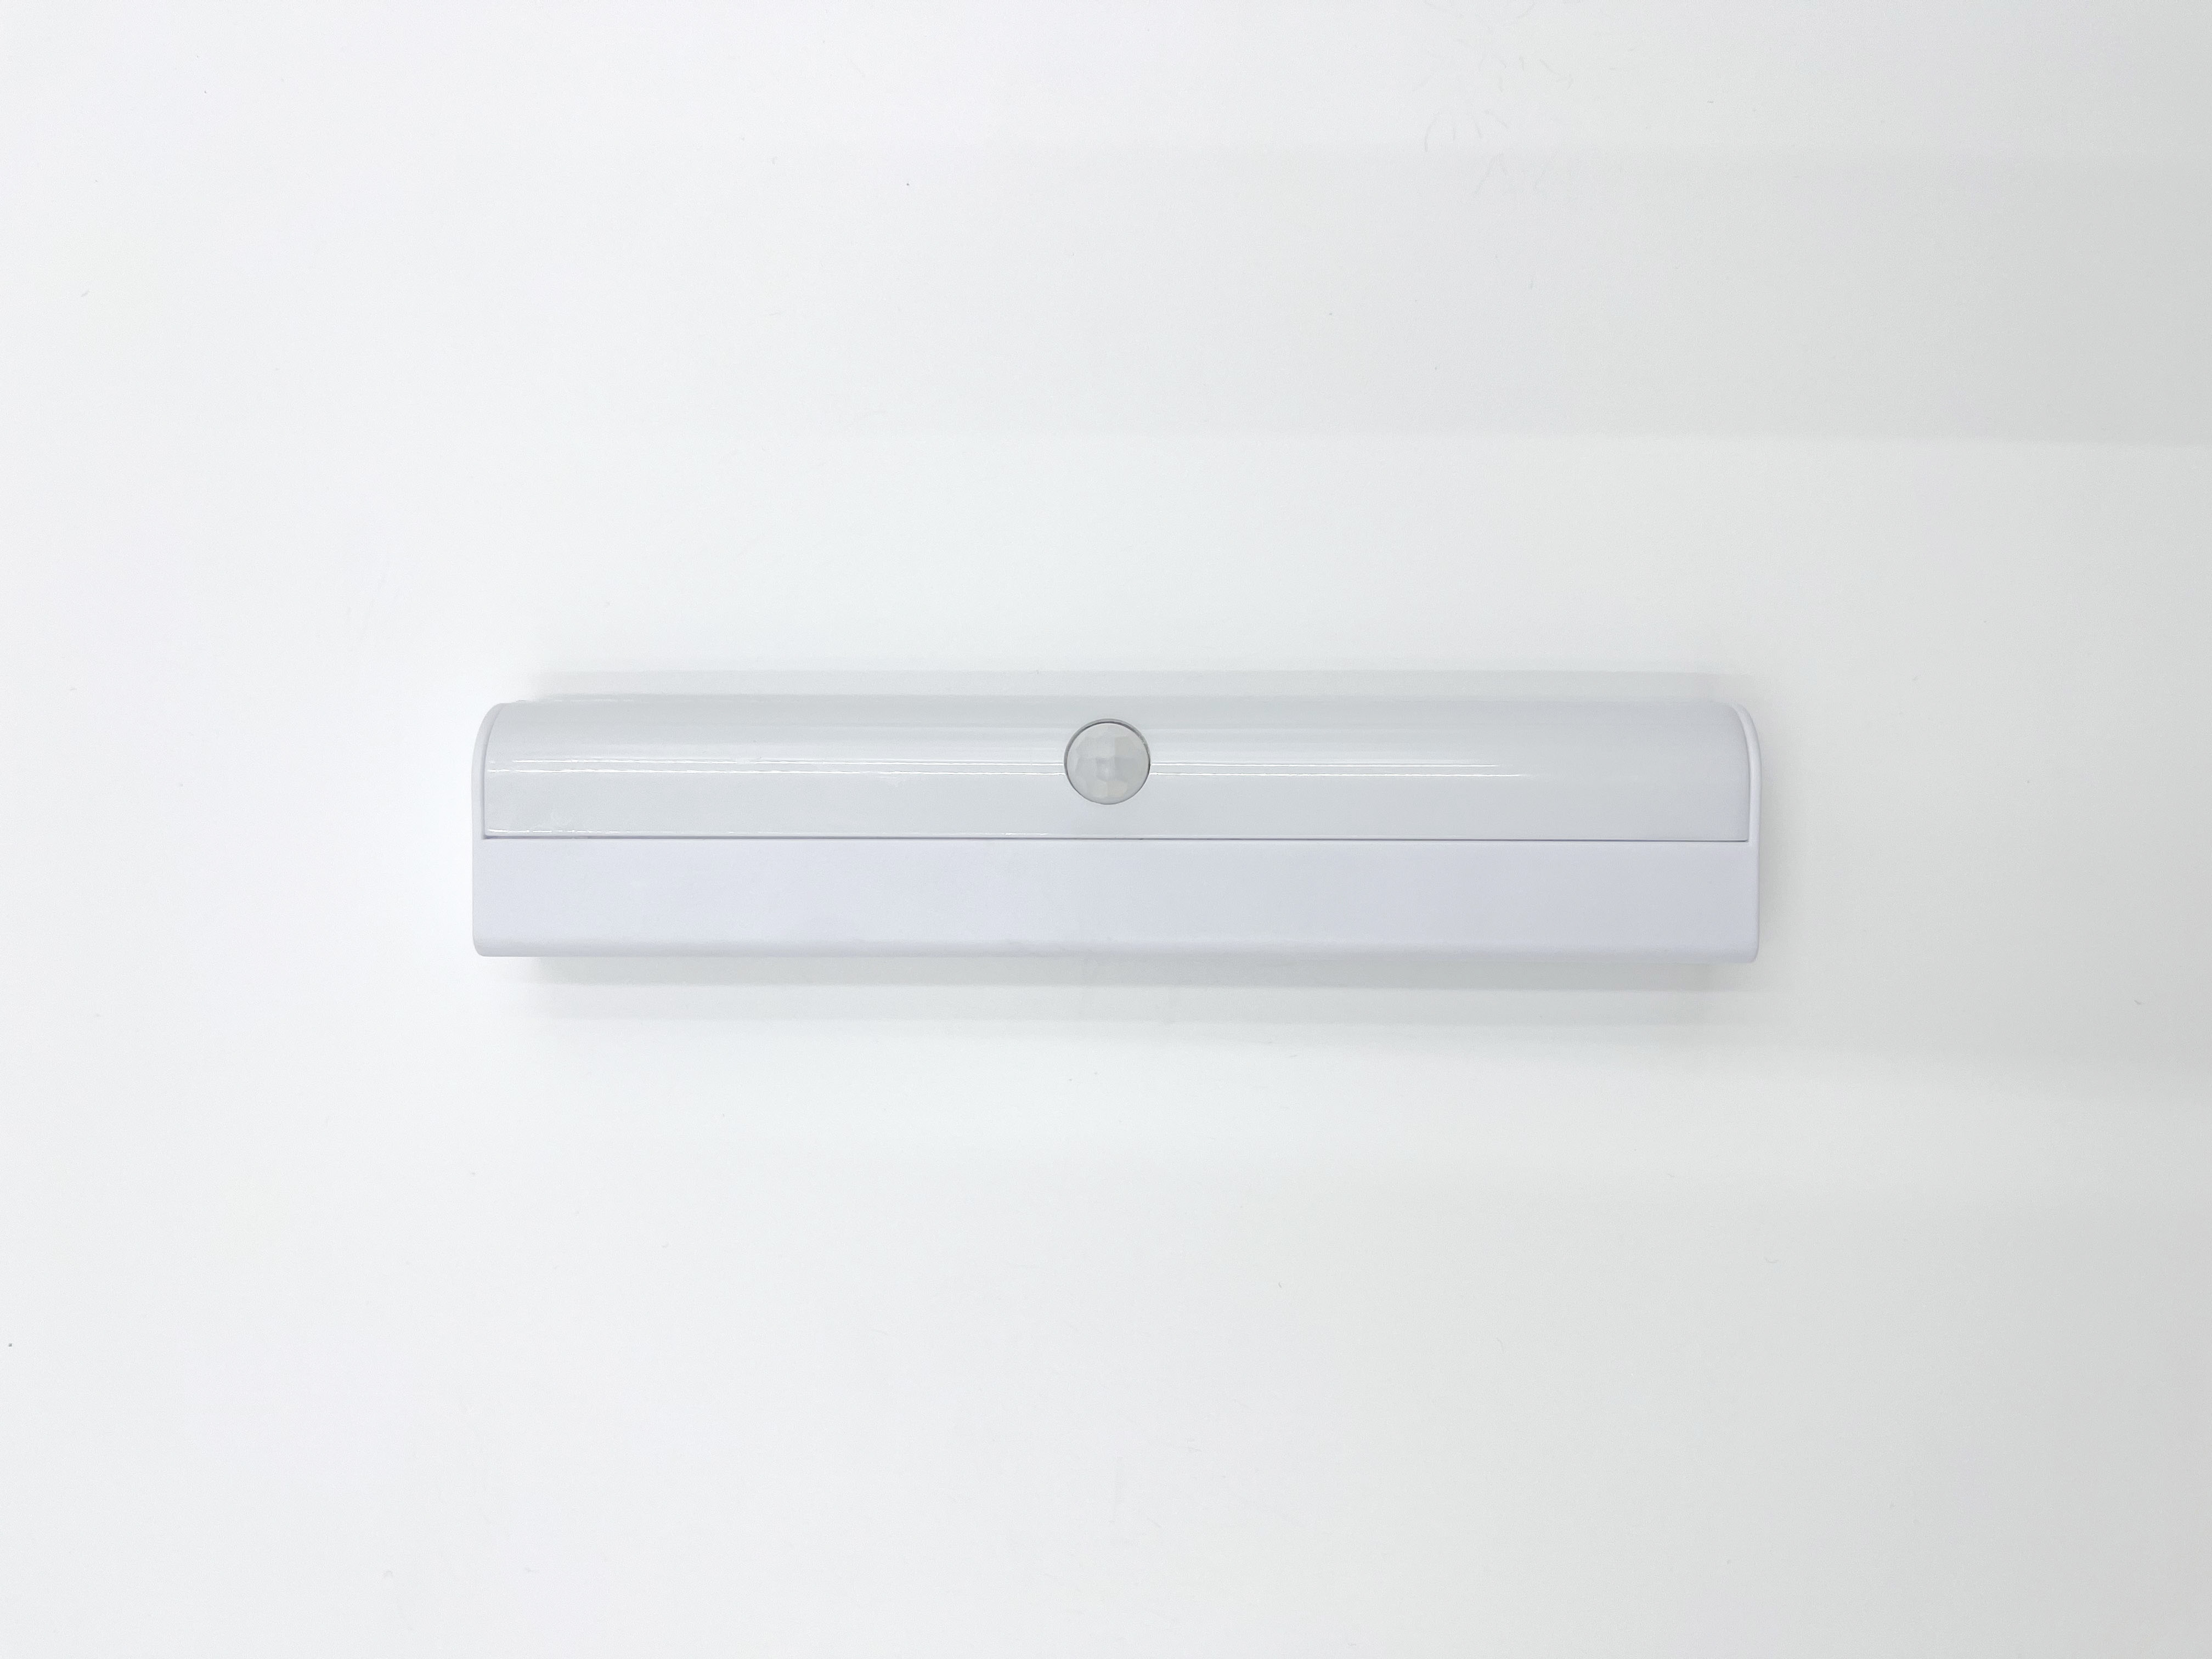 Motion Sensor Cabinet Light